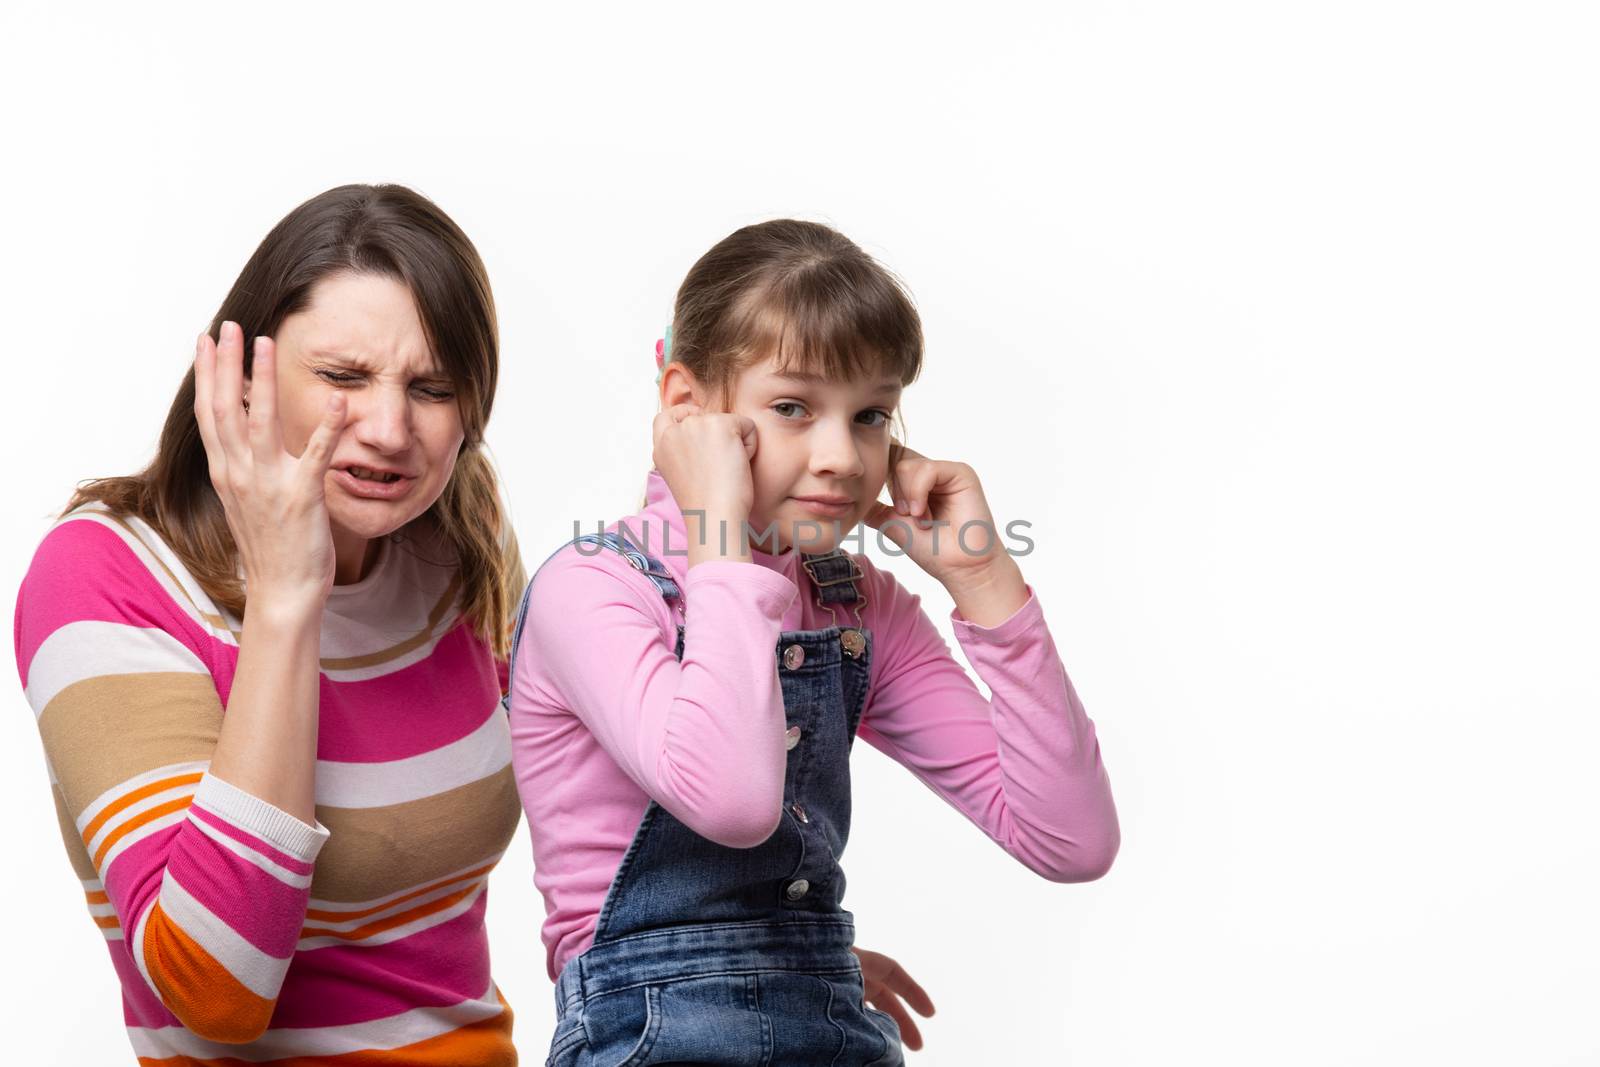 Girl sneezes, child plugged ears, isolated on white background